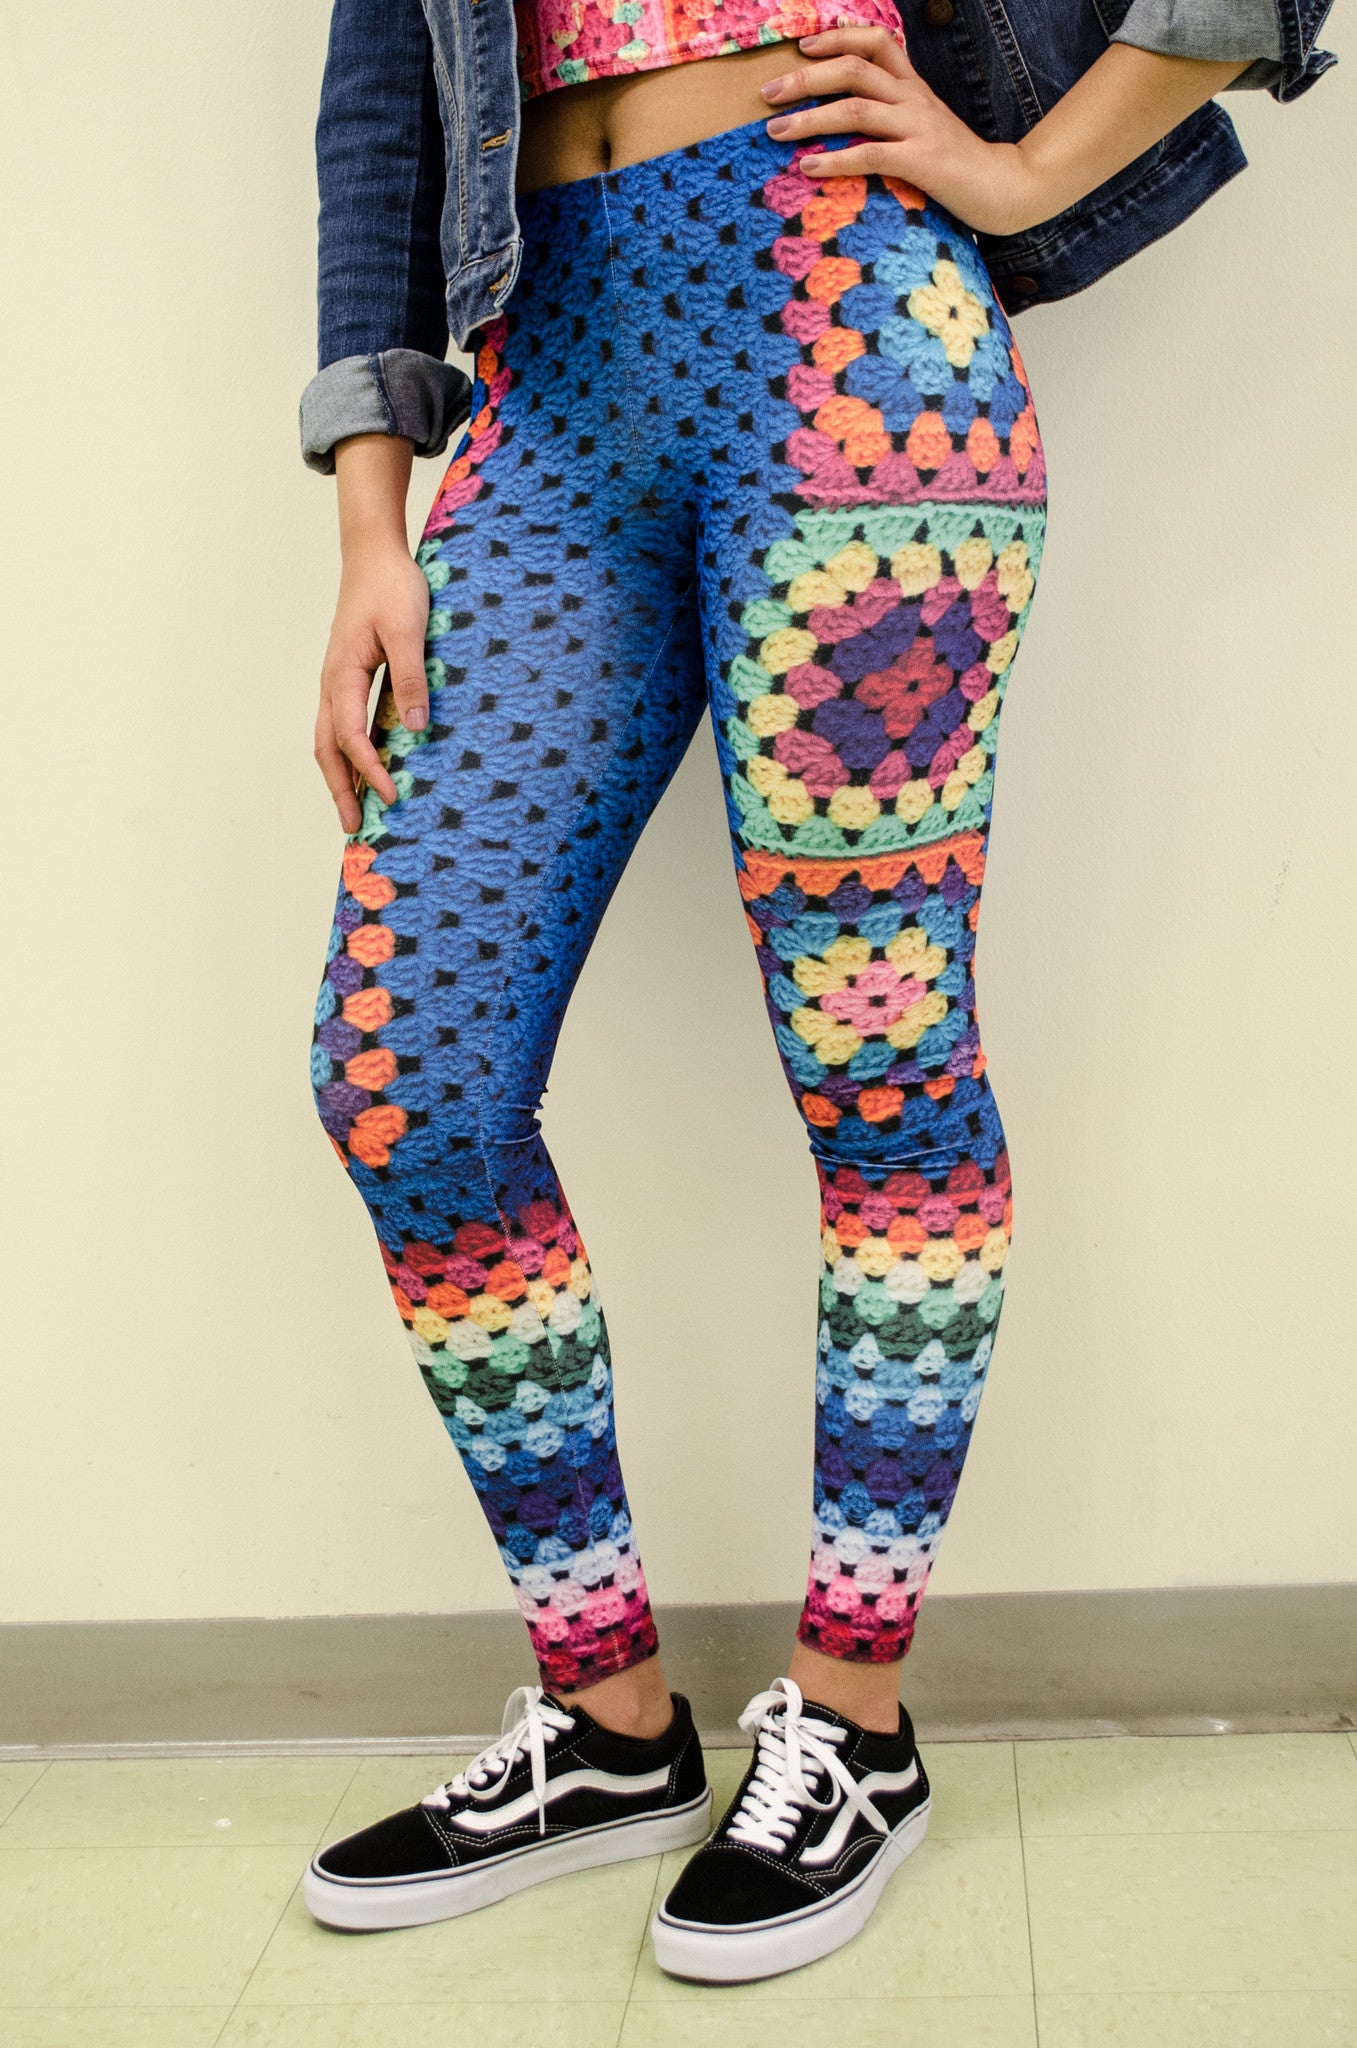 Beulah' Rainbow Granny Square Crochet Print Leggings – Snapdragon Brand